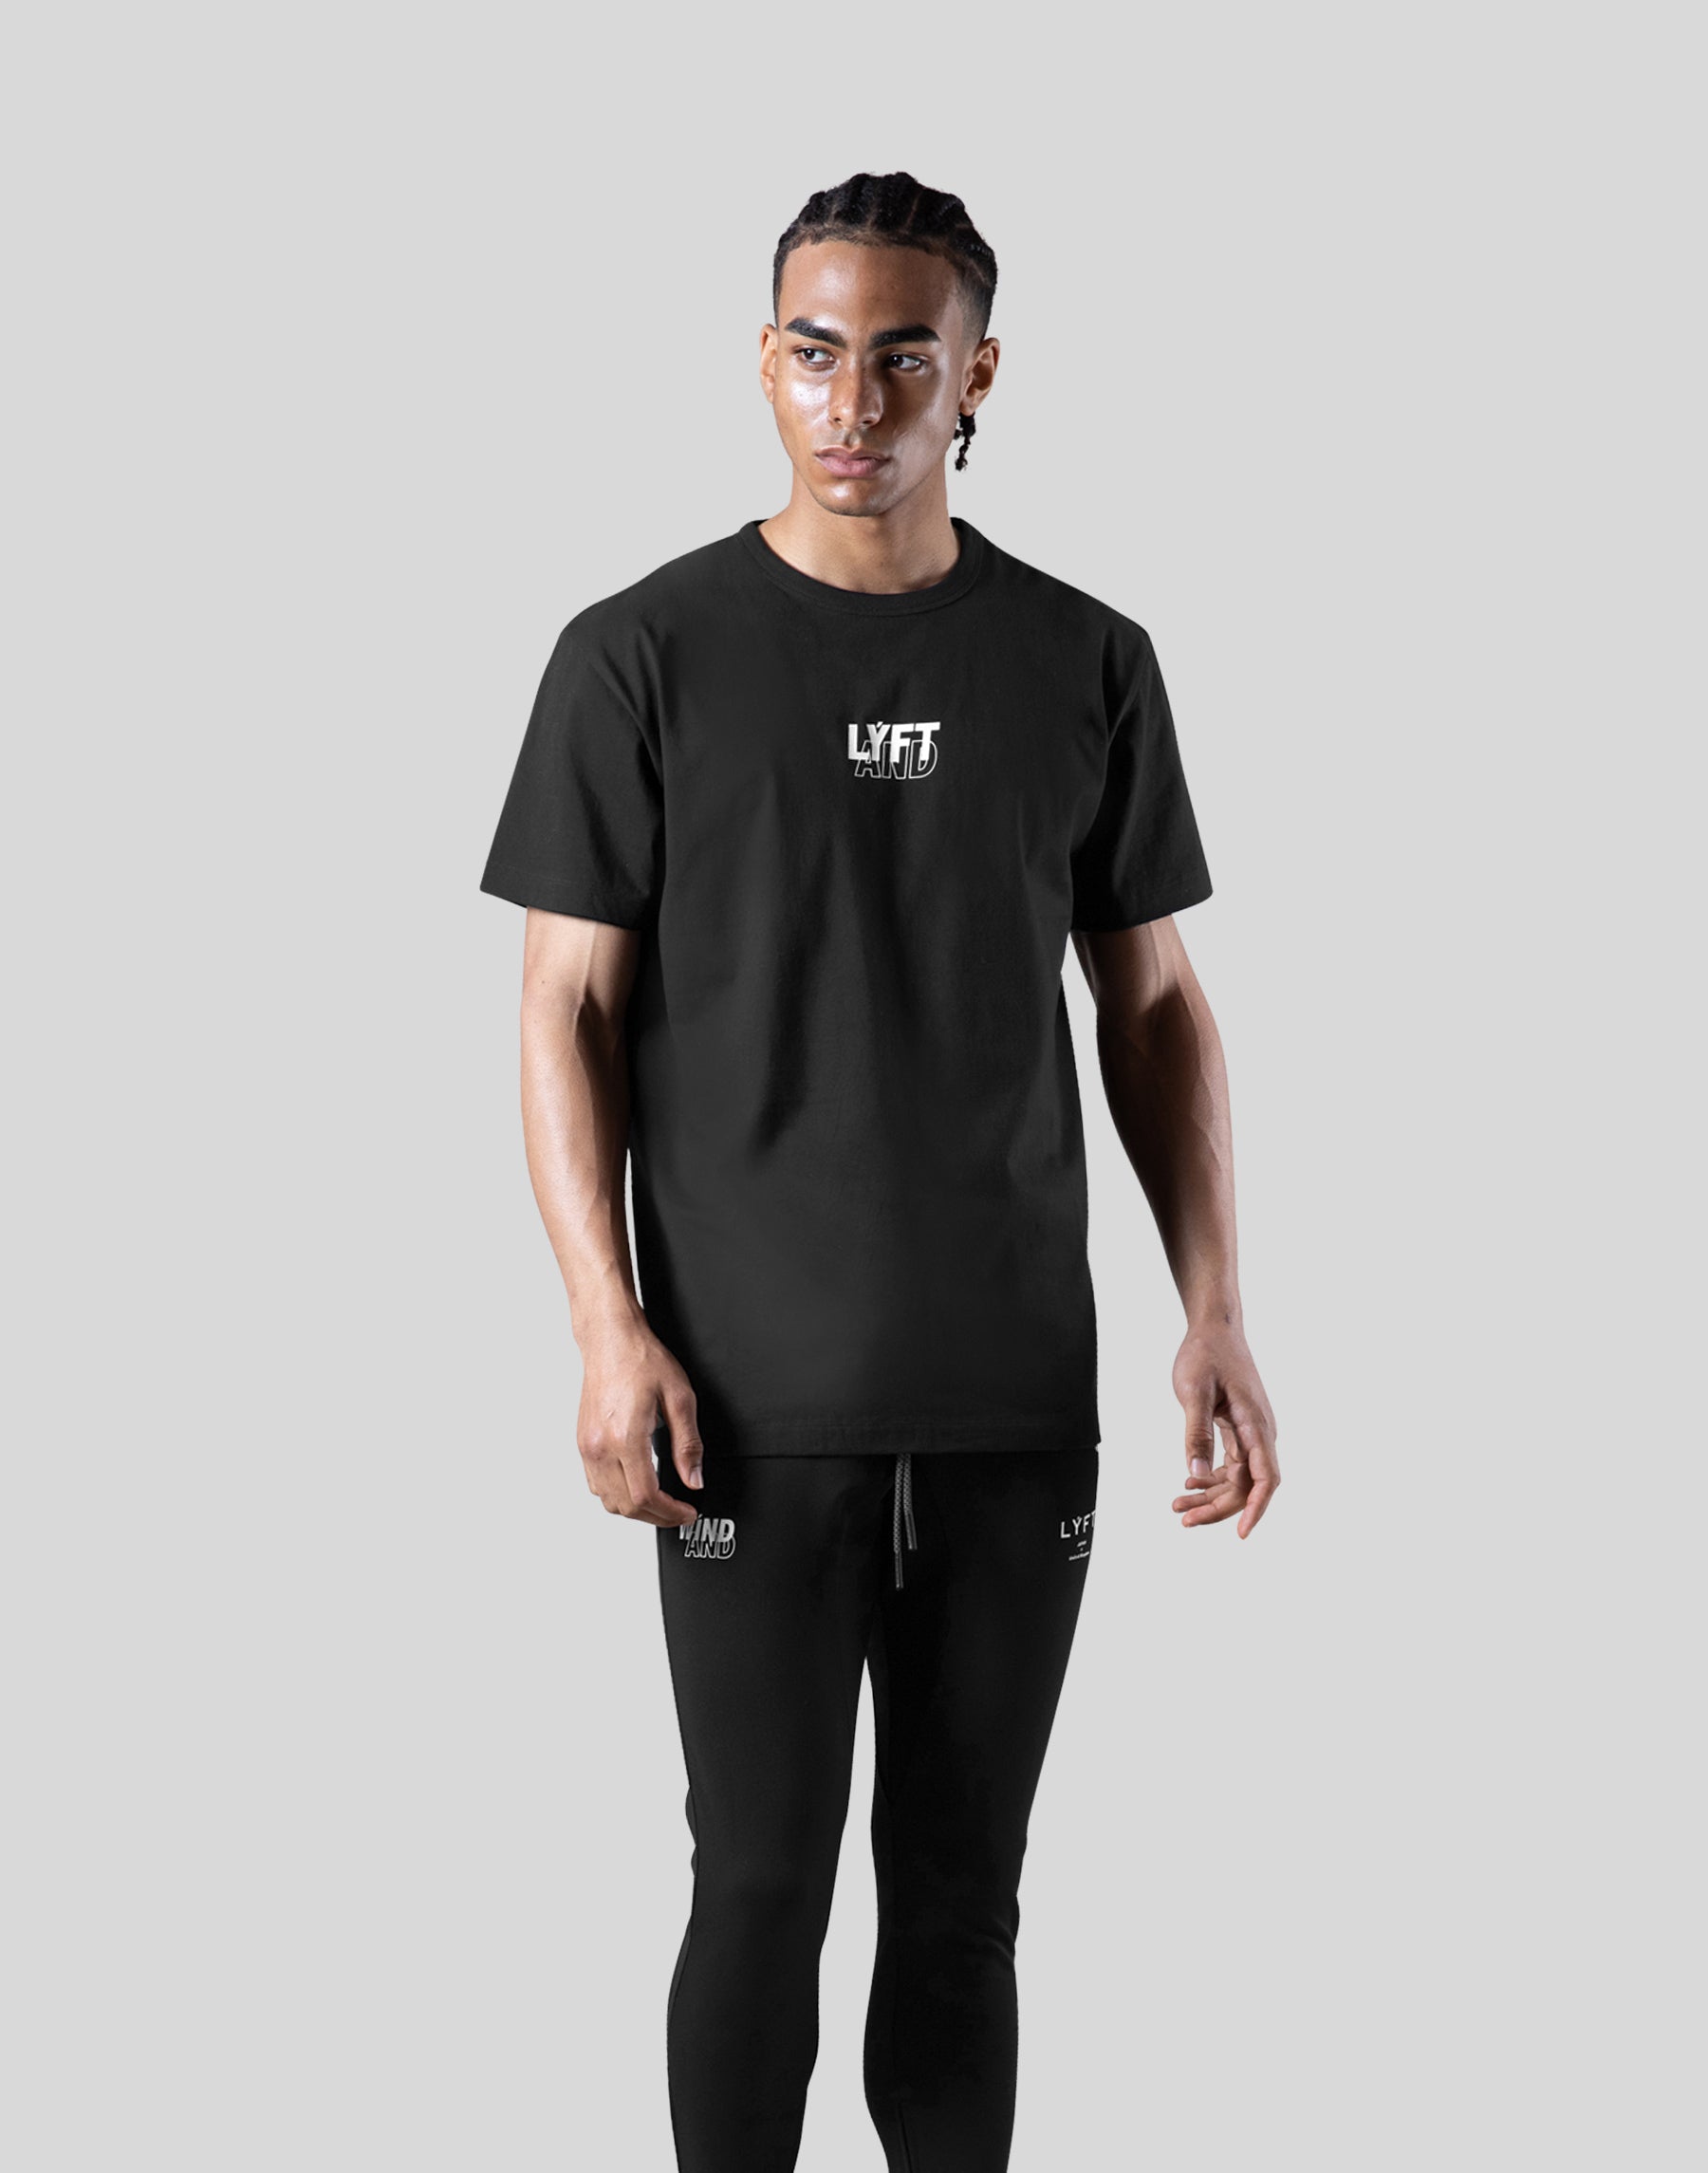 WINDANDSEA METAL TEE / BLACK Tシャツ 黒M - Tシャツ/カットソー(半袖